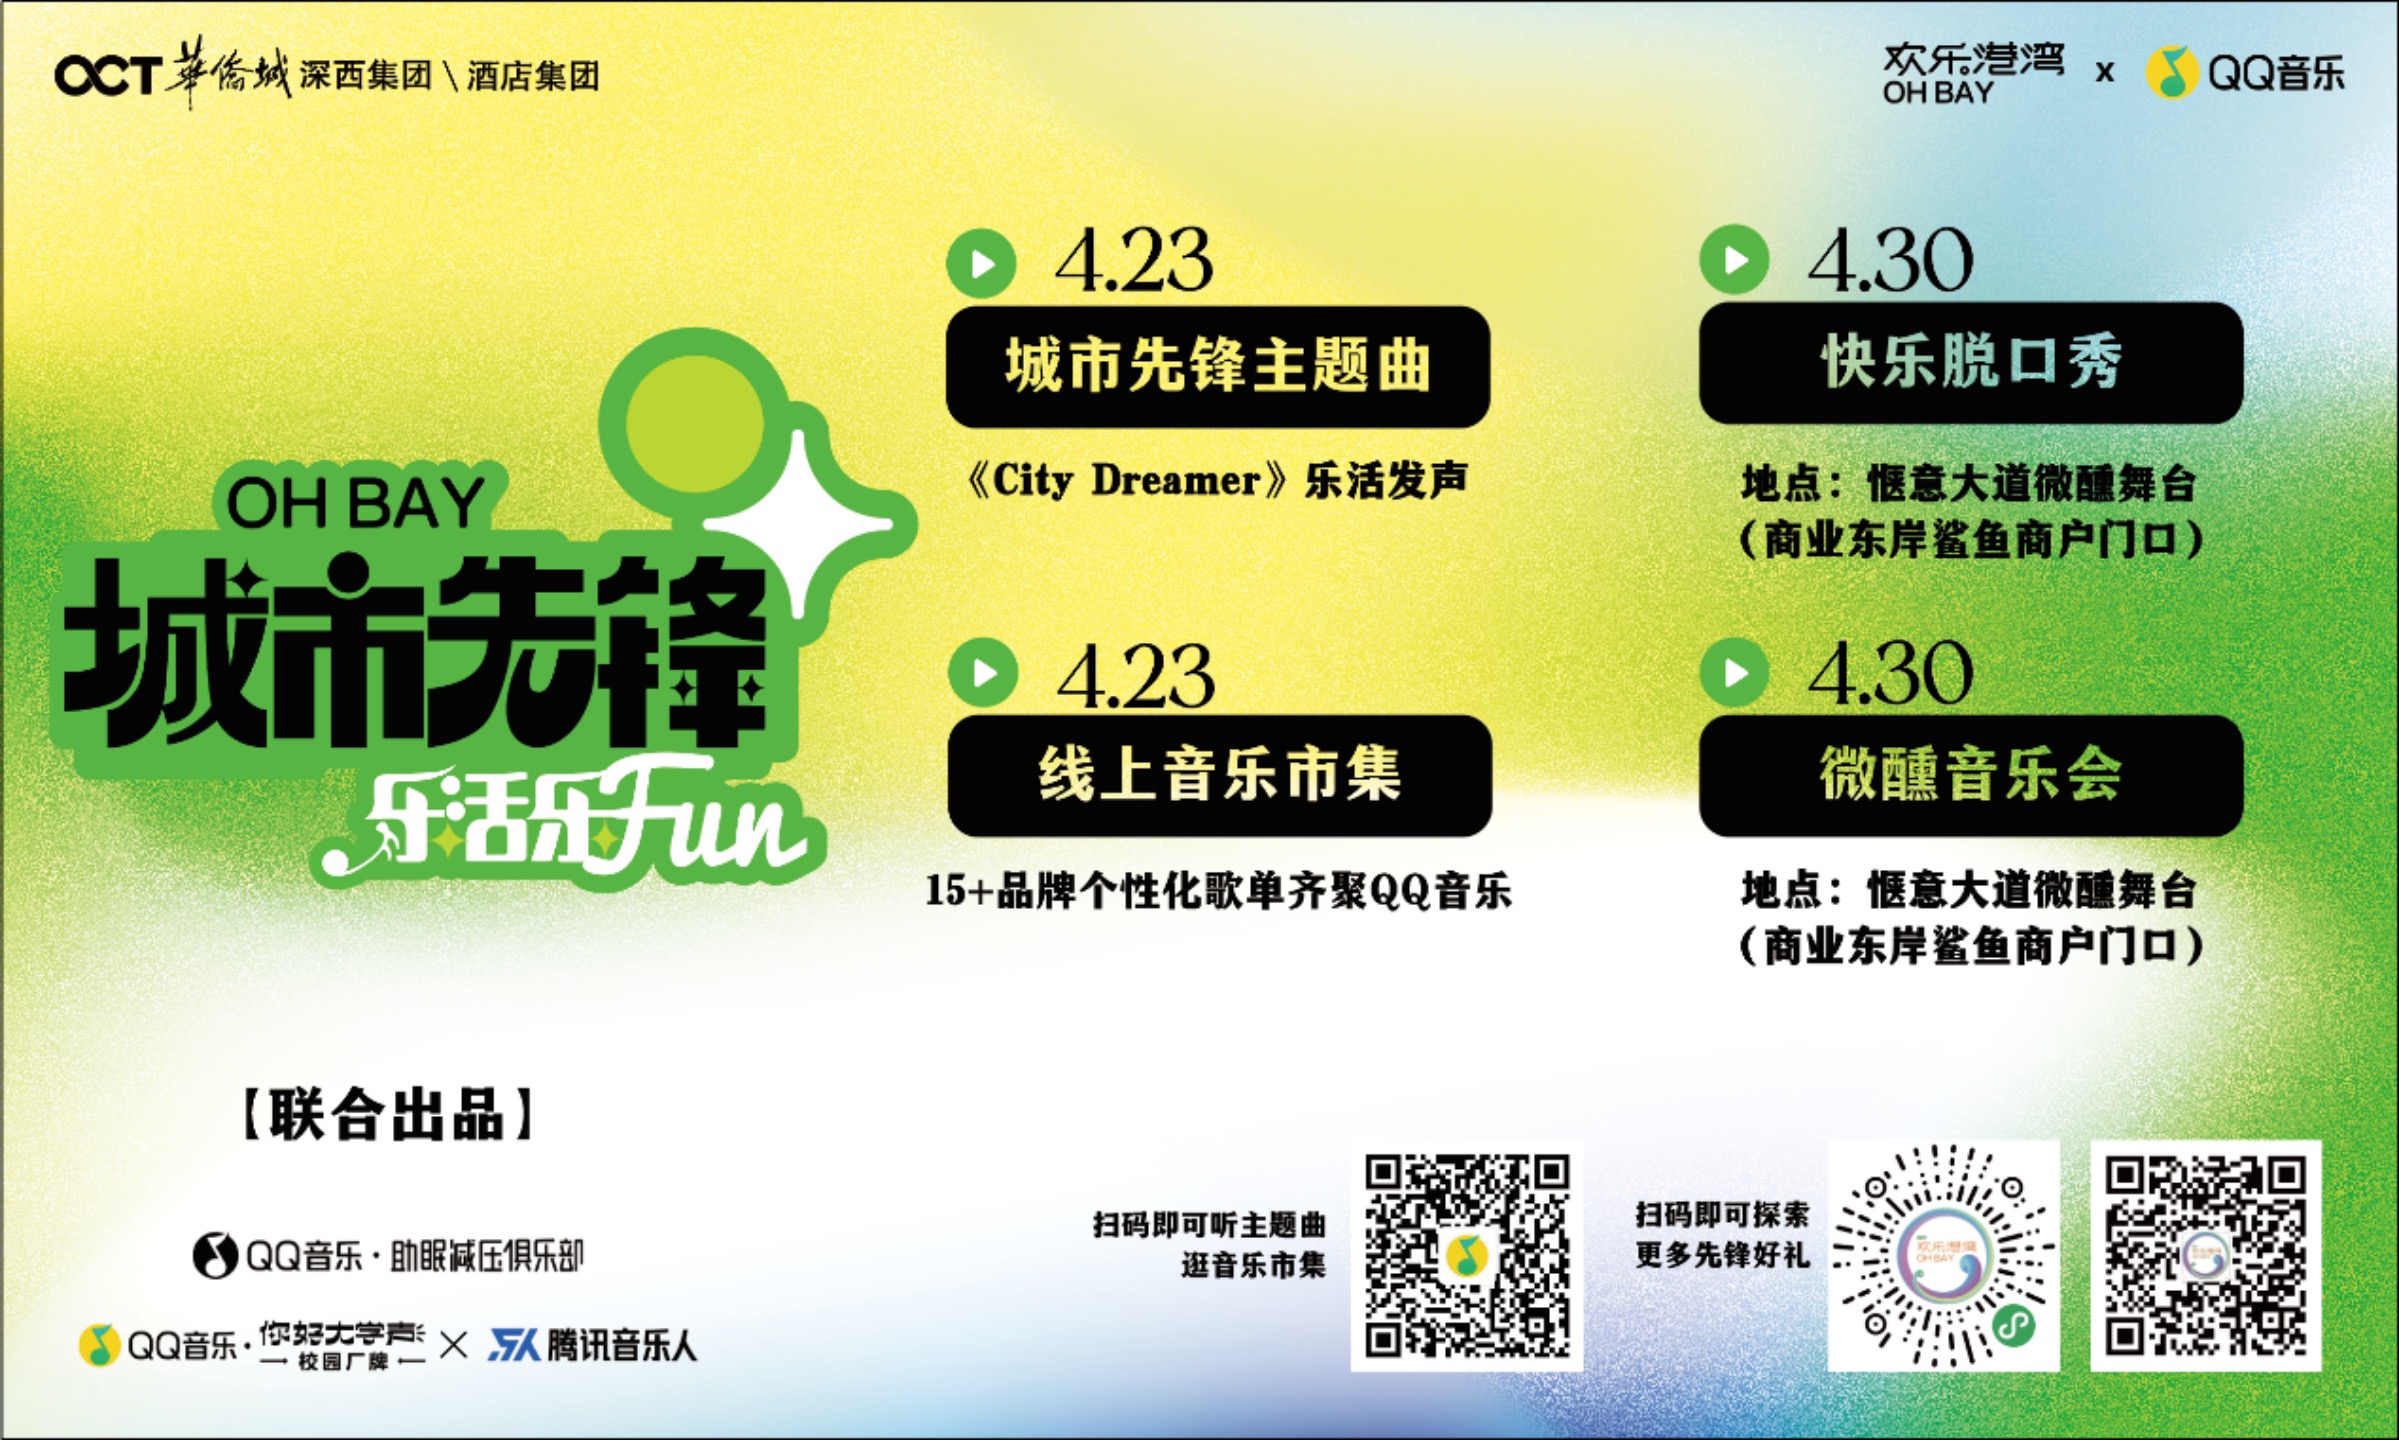 QQ音乐携手欢乐港湾摩天轮商圈开启“城市先锋”系列音乐活动，“五一”解压·传递快乐！